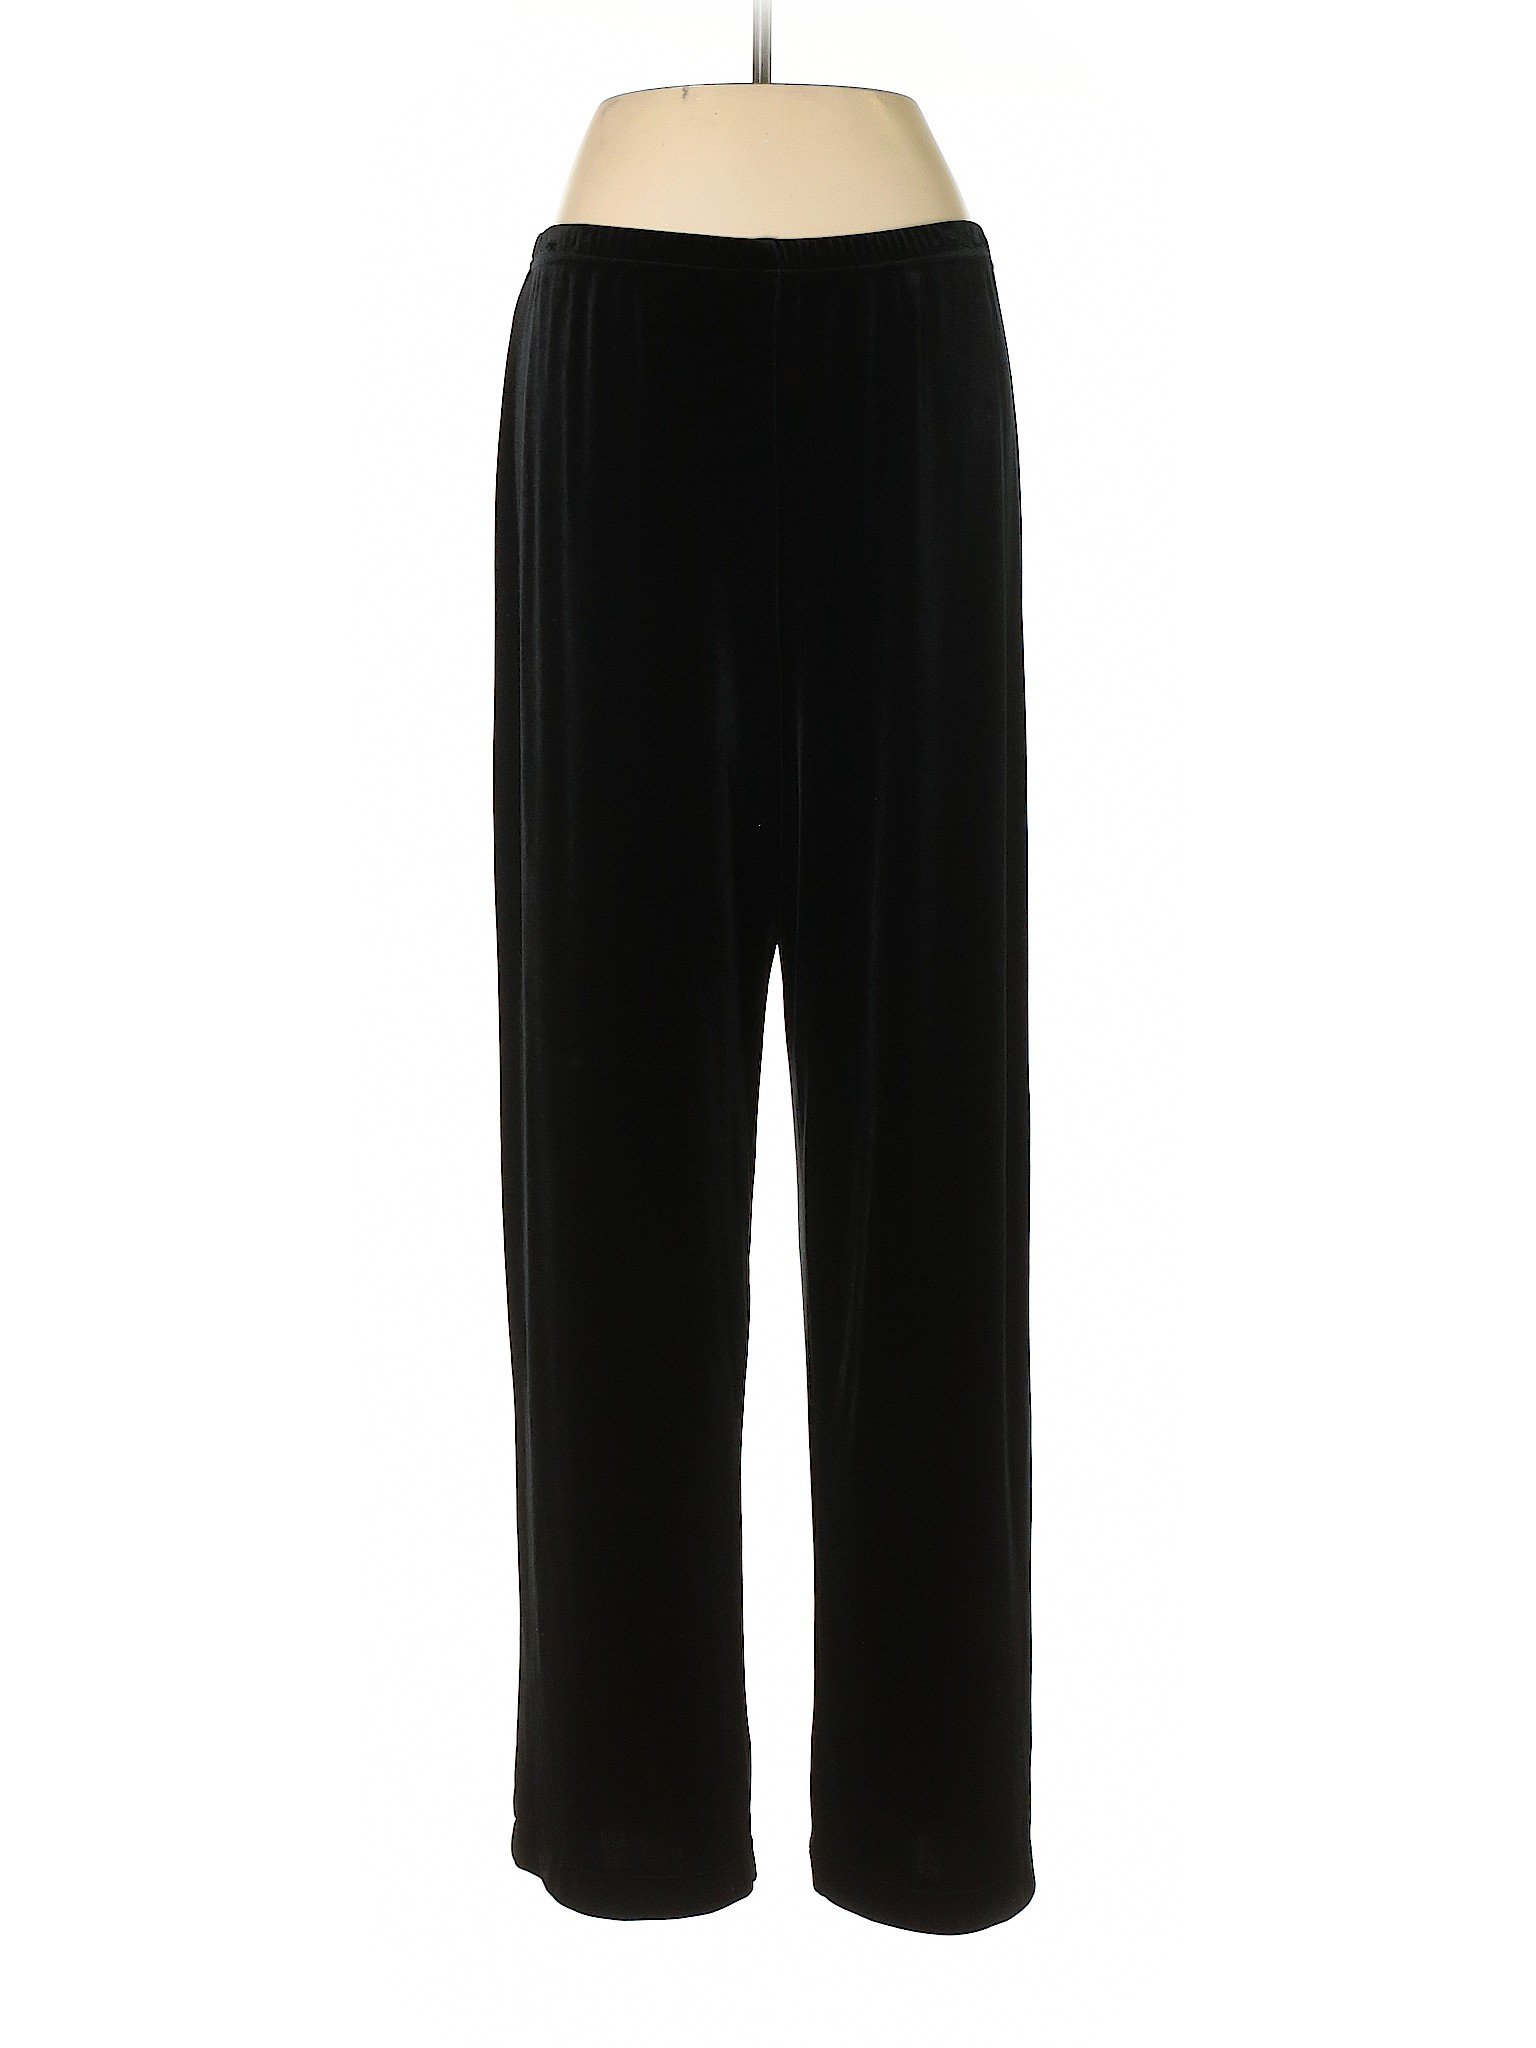 Sara Campbell Women Black Casual Pants M | eBay